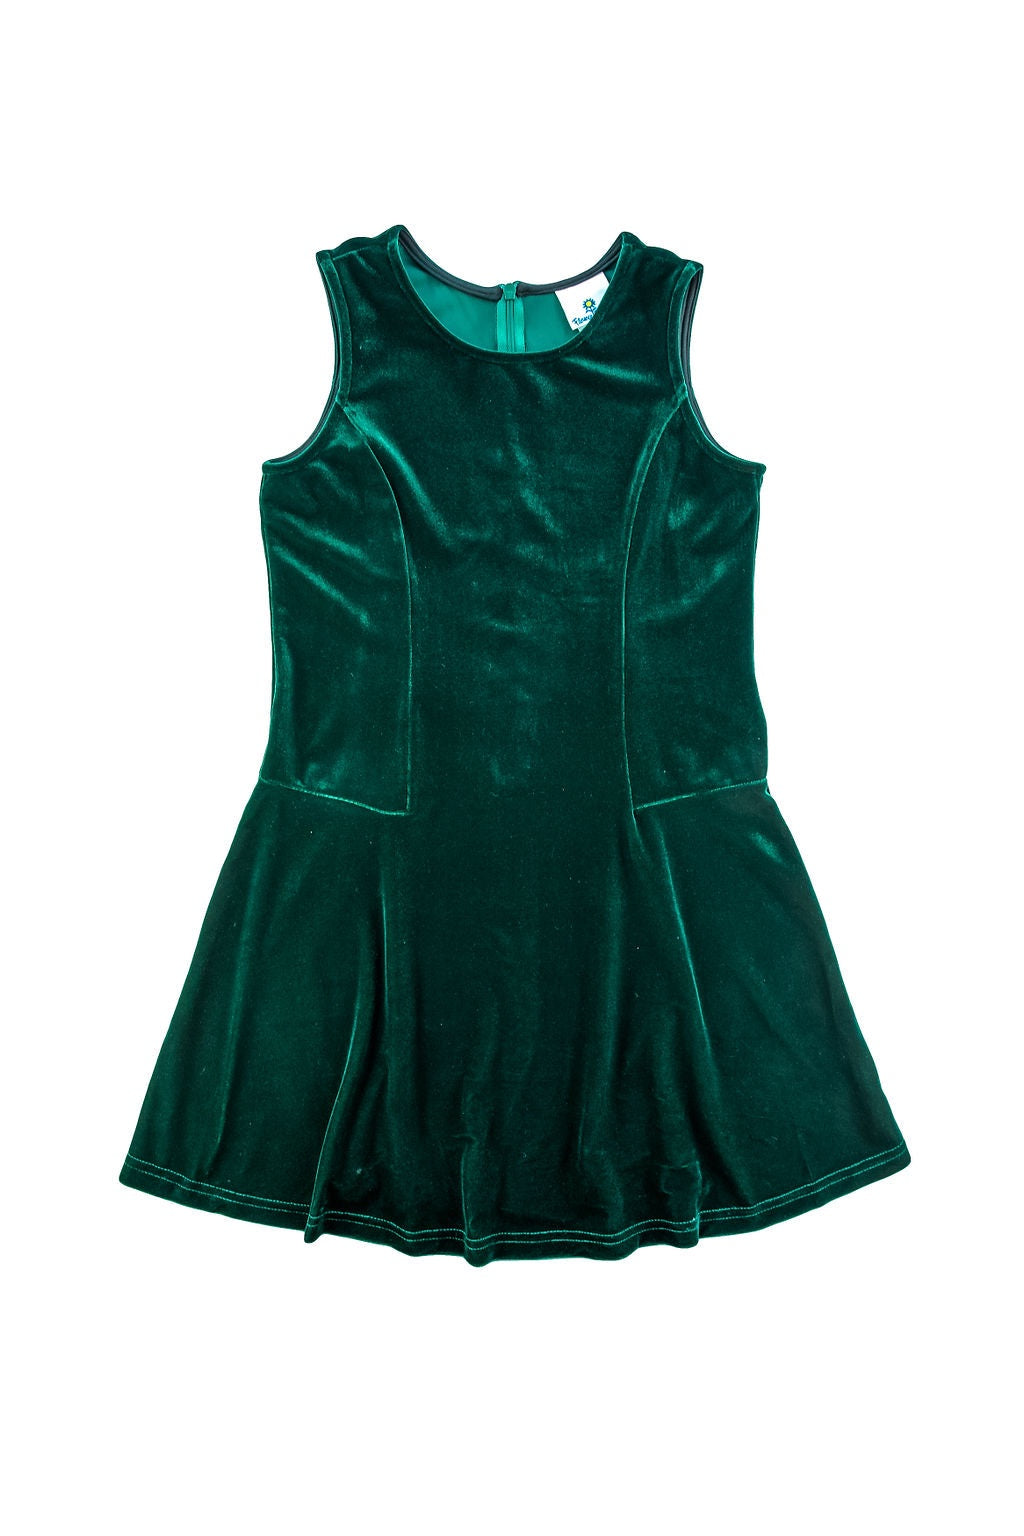 Florence Eiseman Green Stretch Velvet Dress H5114 5009